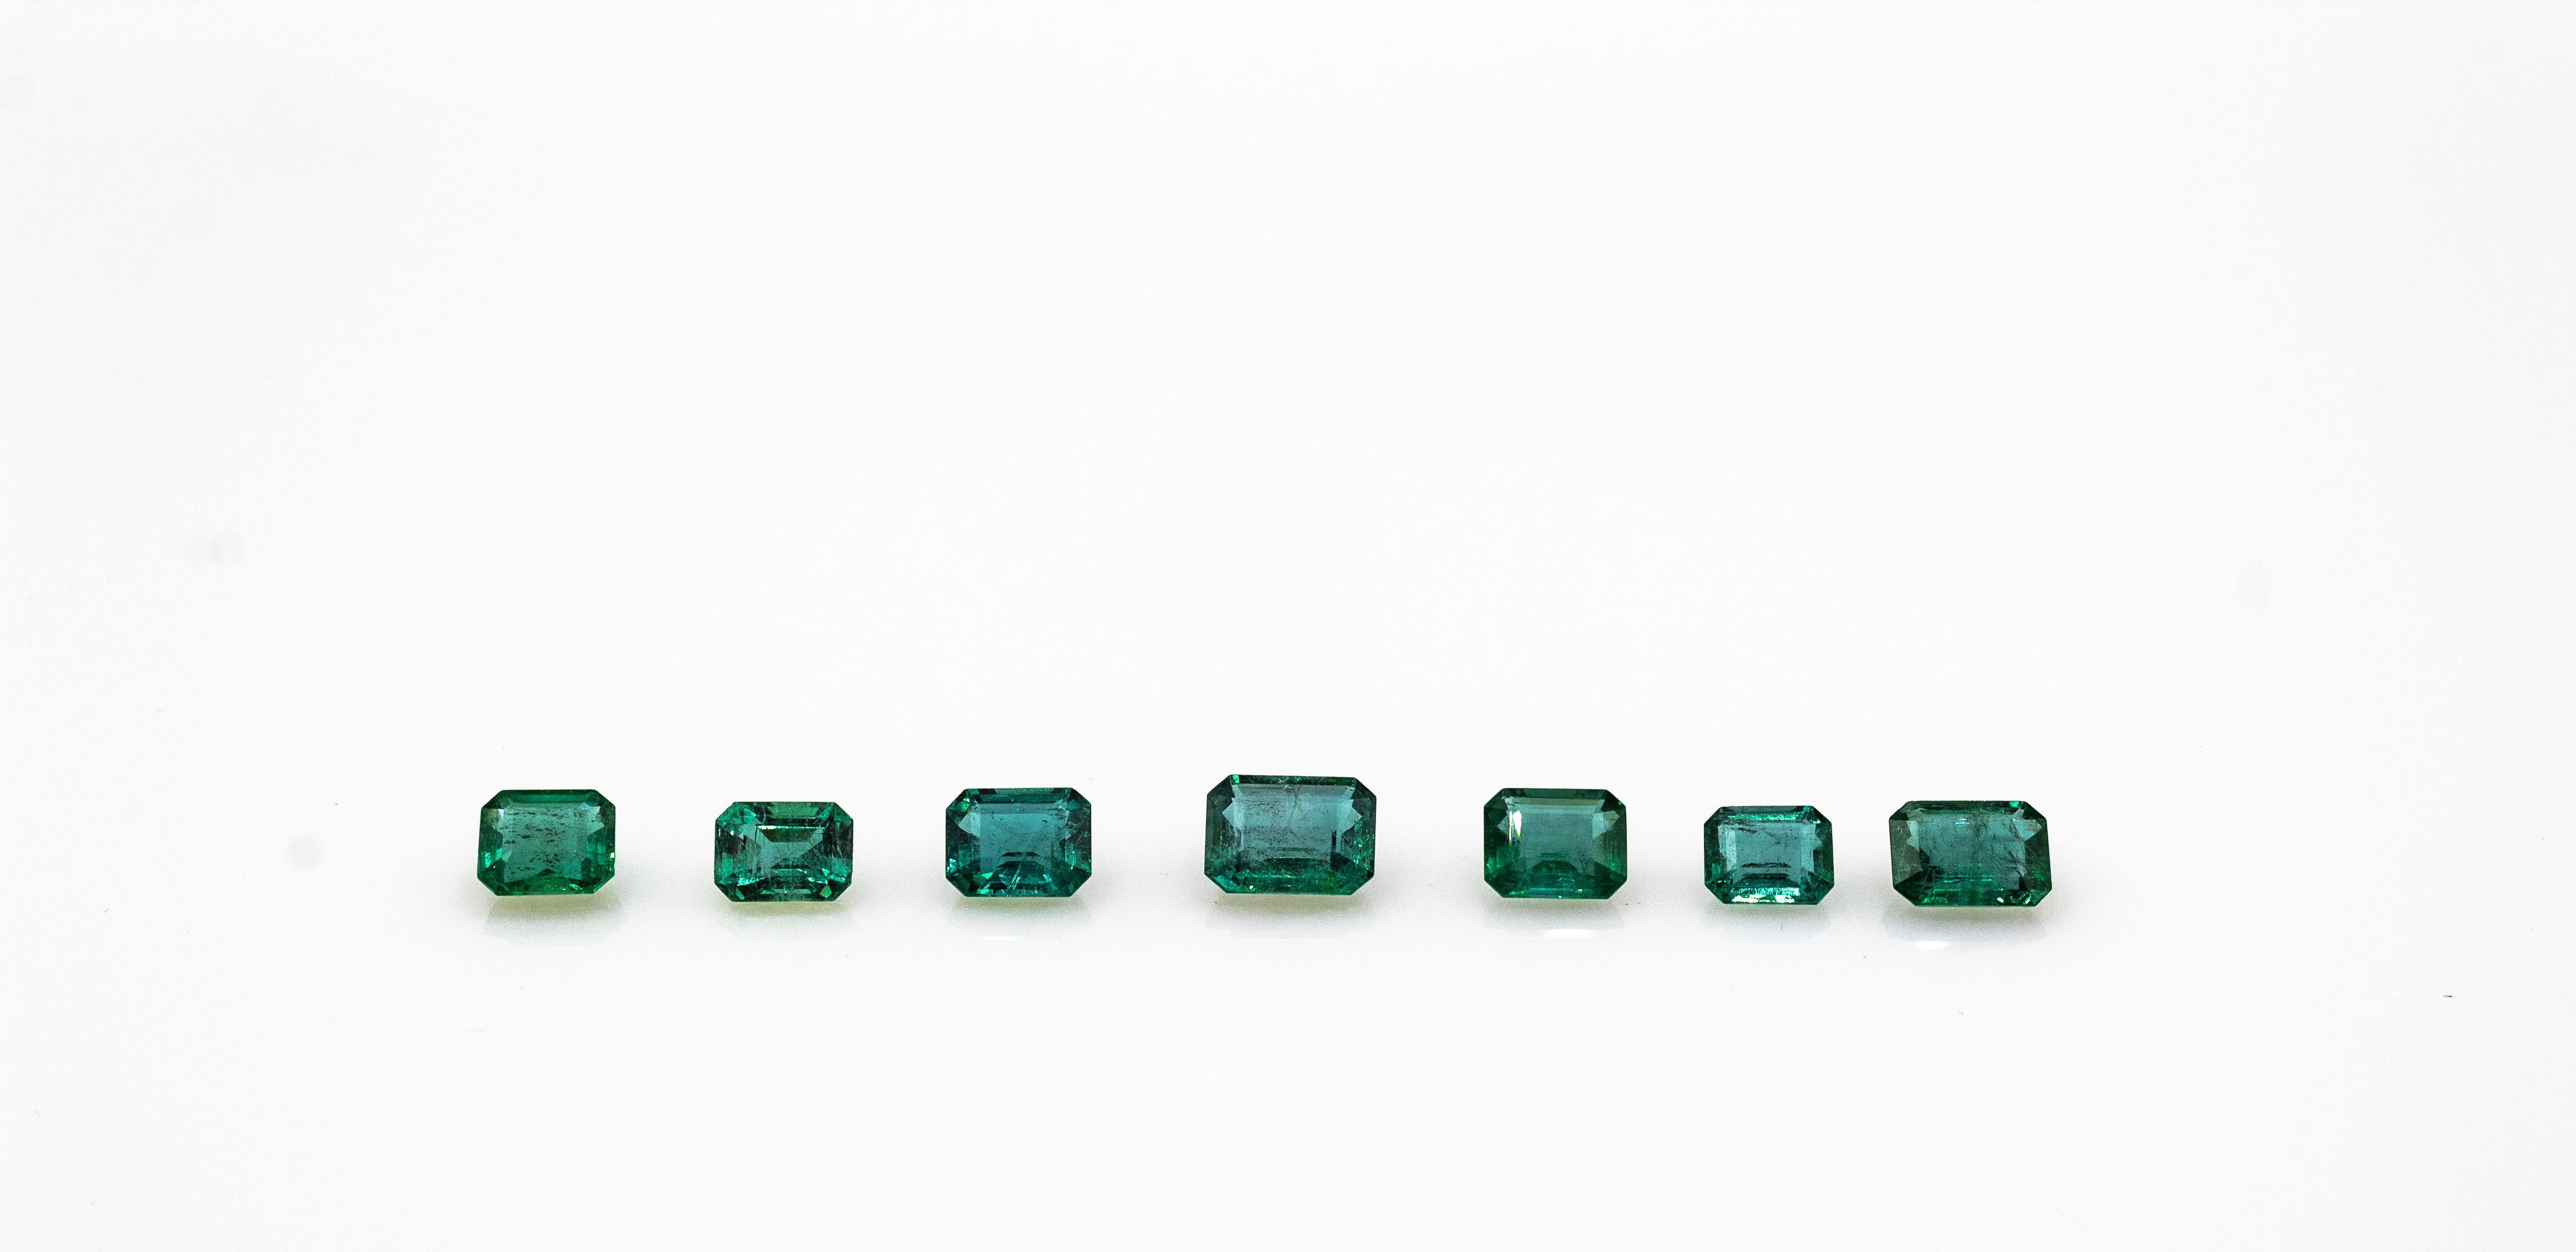 Modern Certifiable Zambia Octagon Cut 4.18 Carat Emerald Loose Gemstone